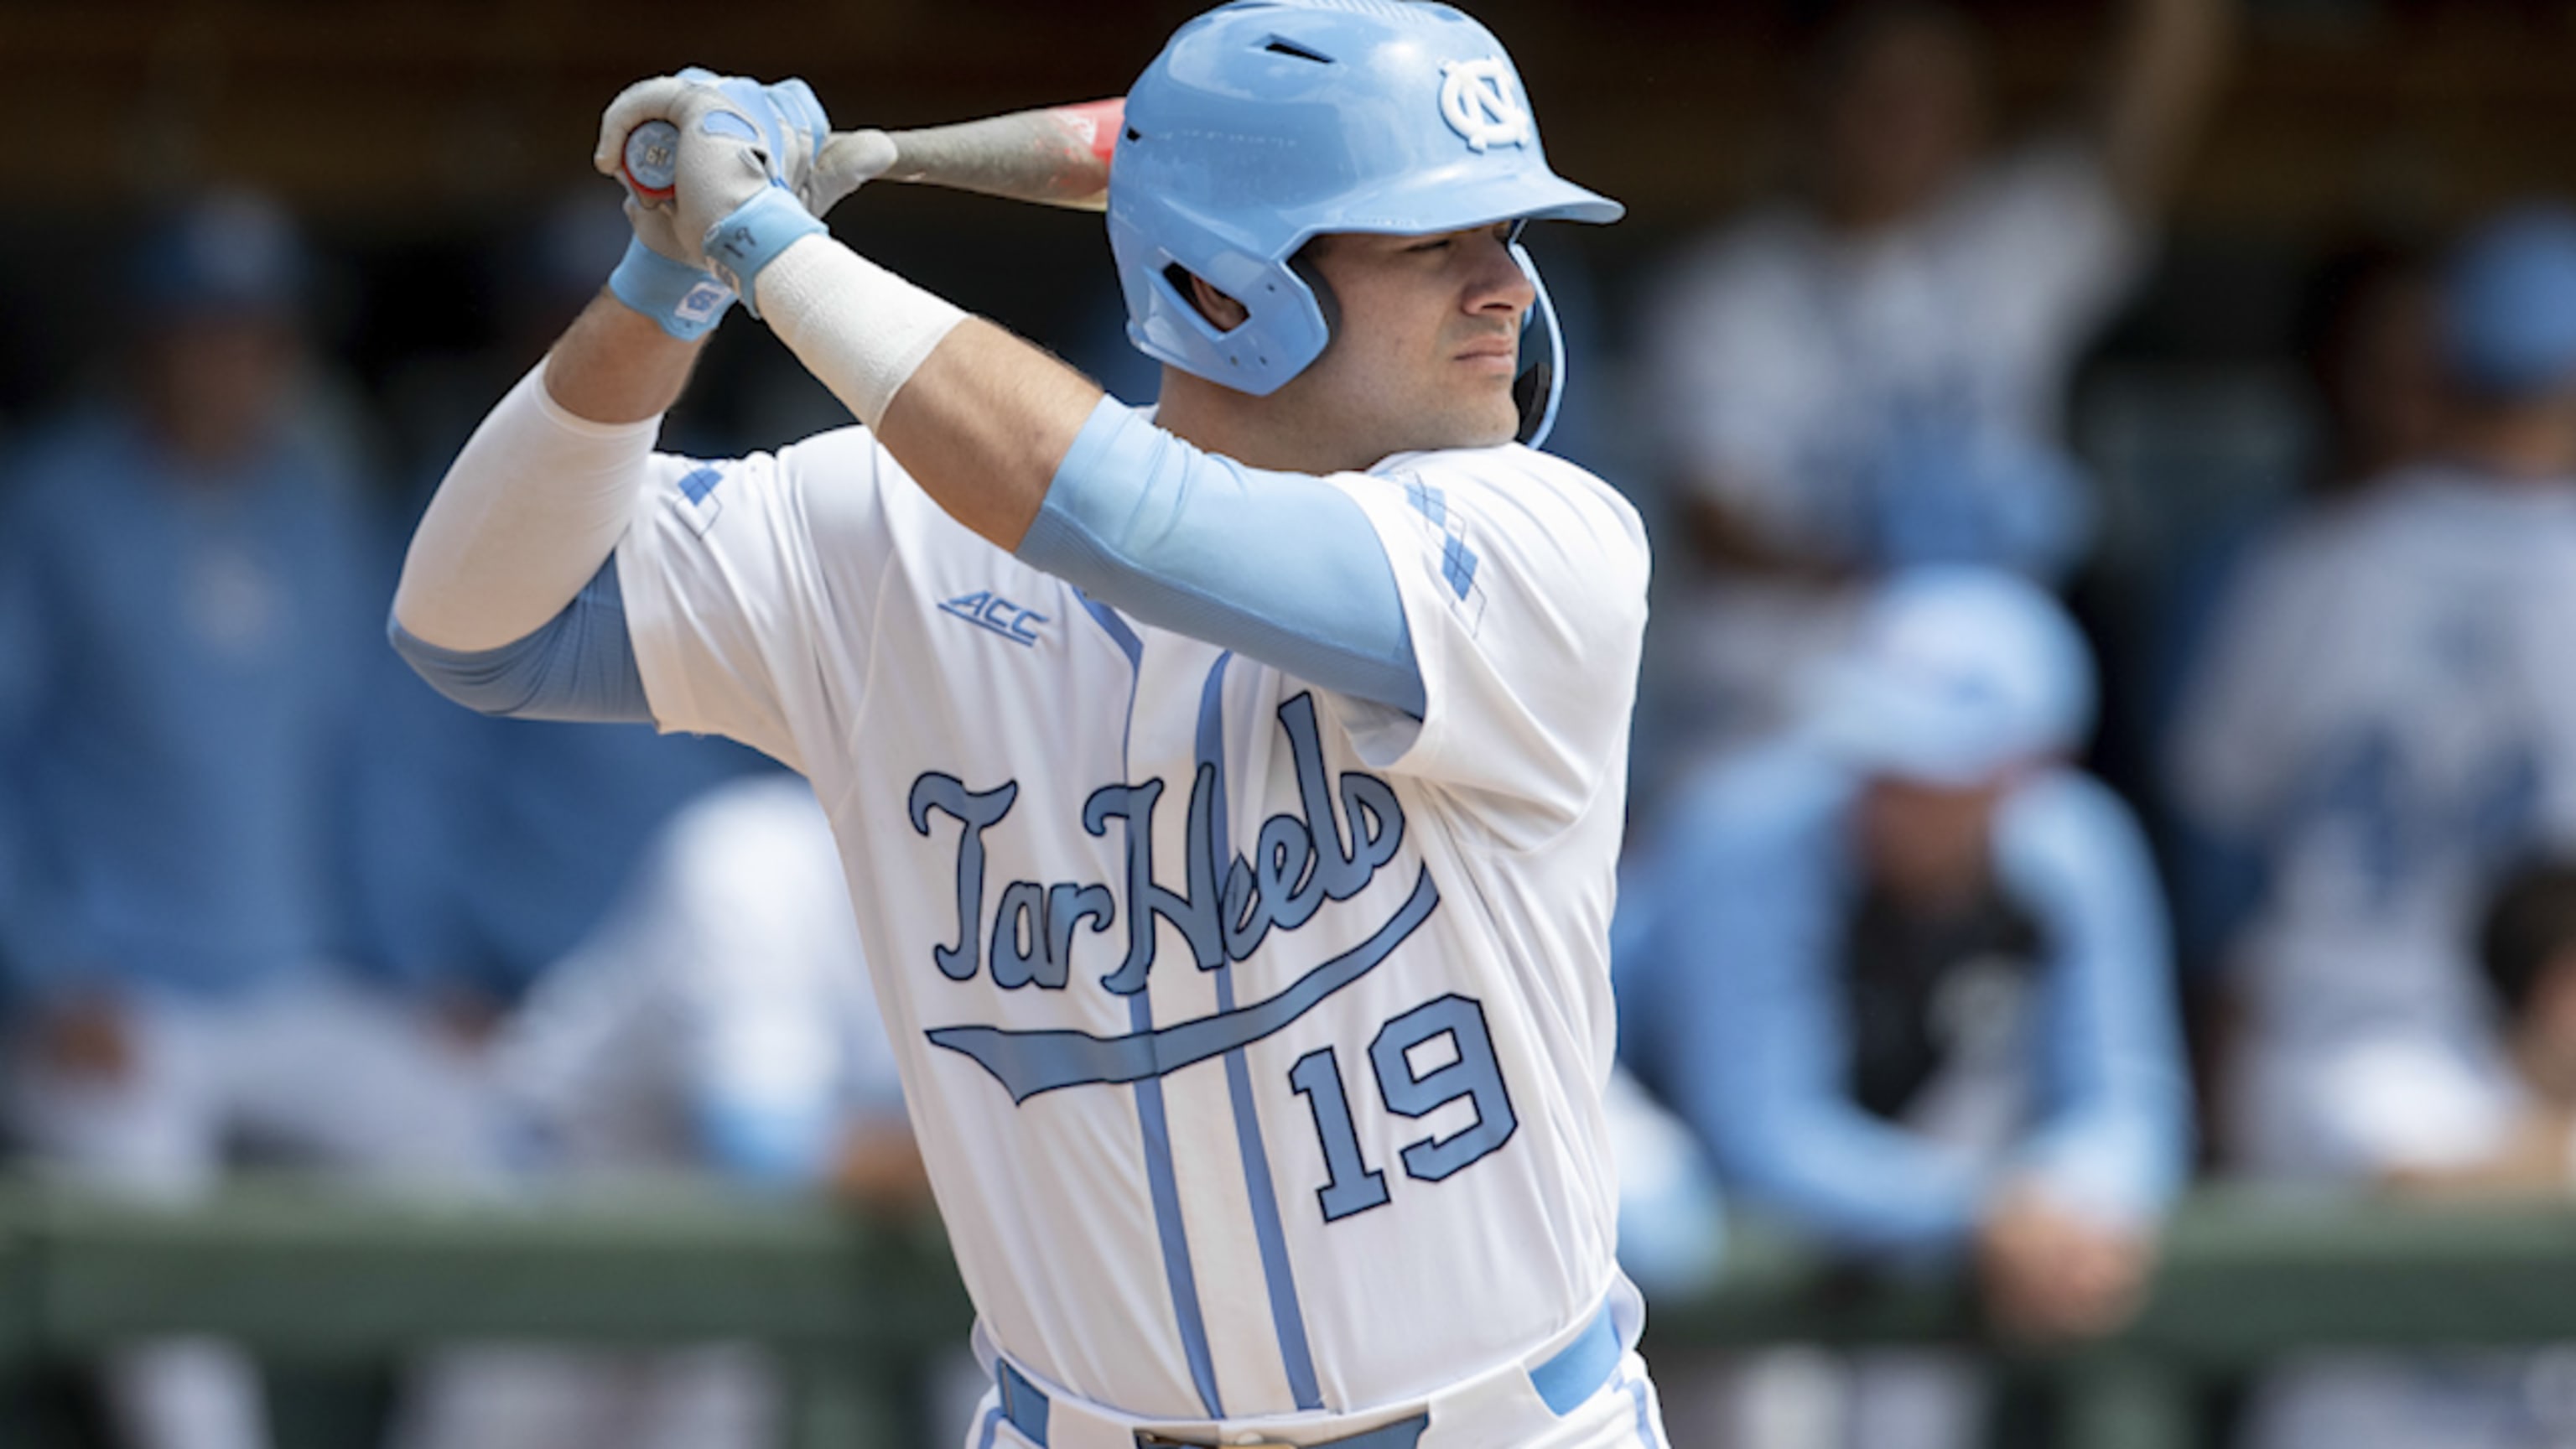 Aaron Sabato - Baseball - University of North Carolina Athletics